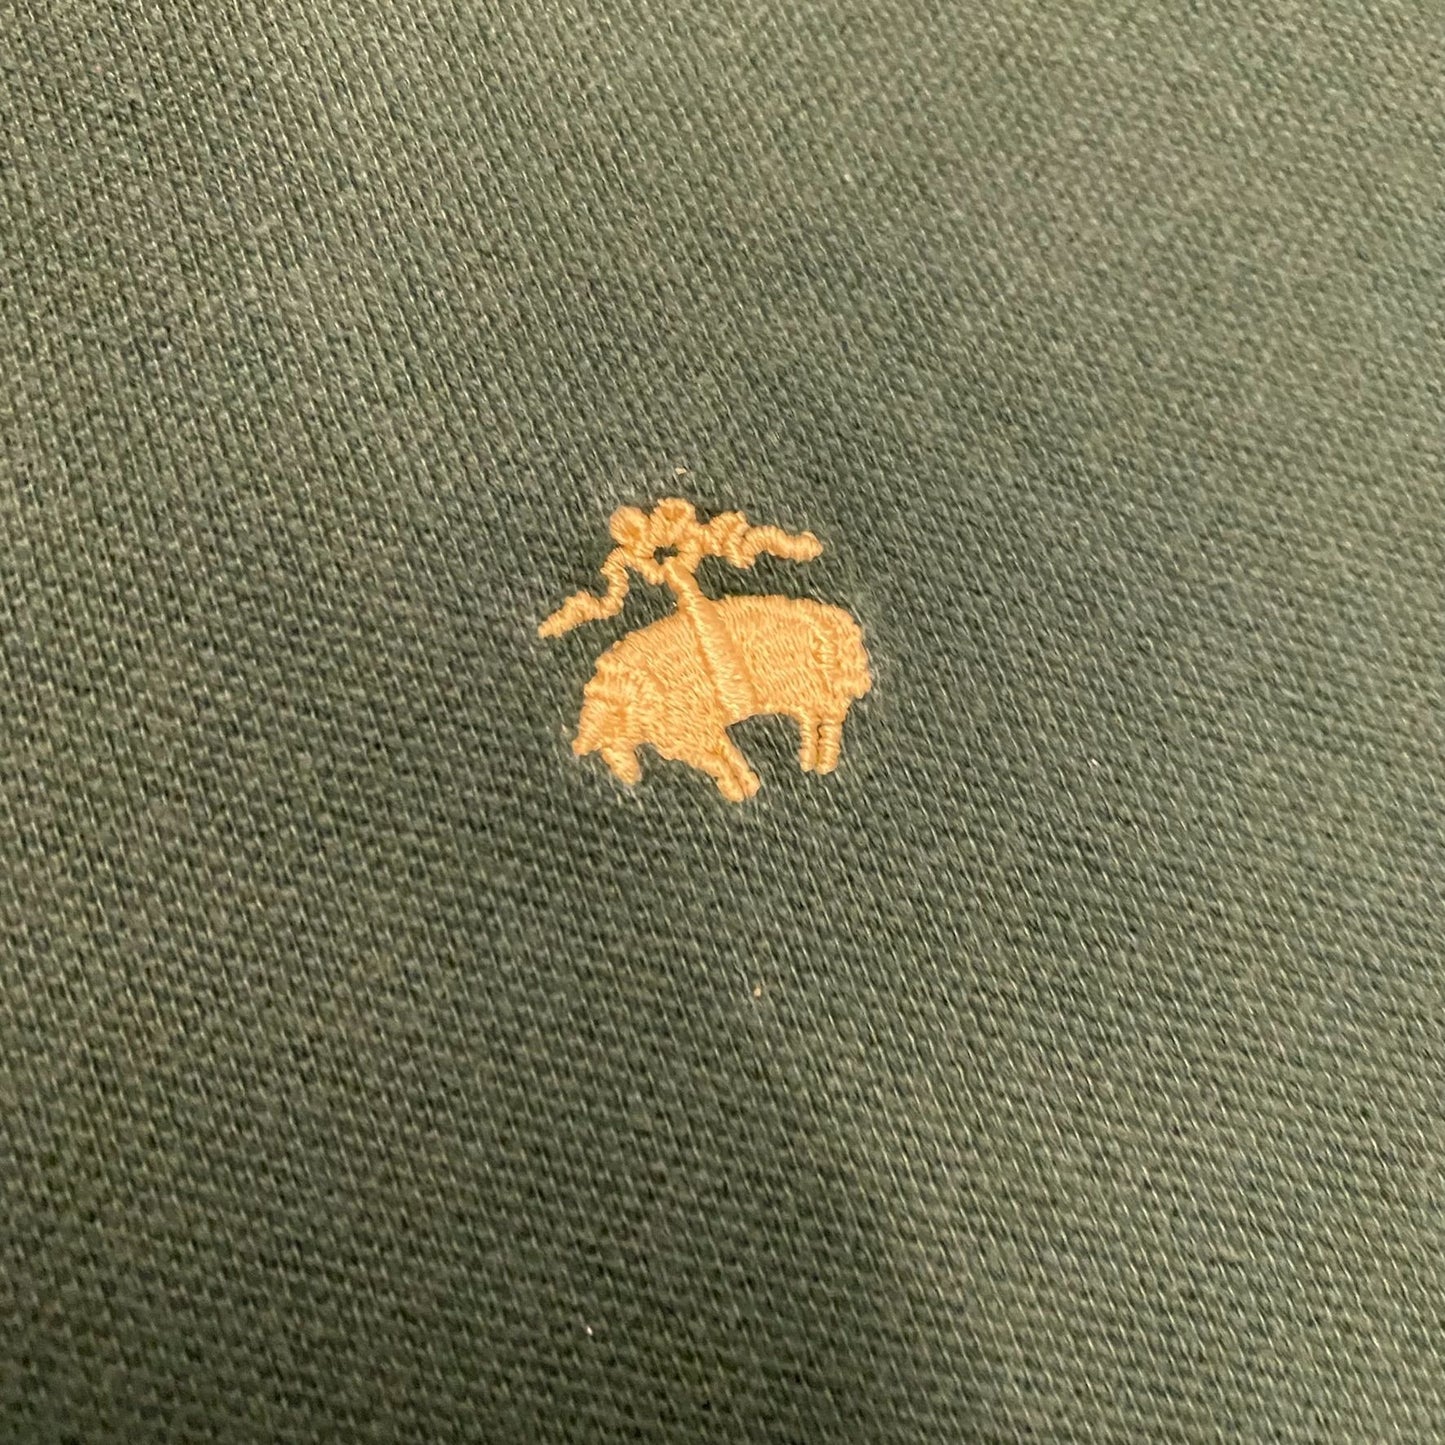 Brooks Brothers Green Polo Shirt